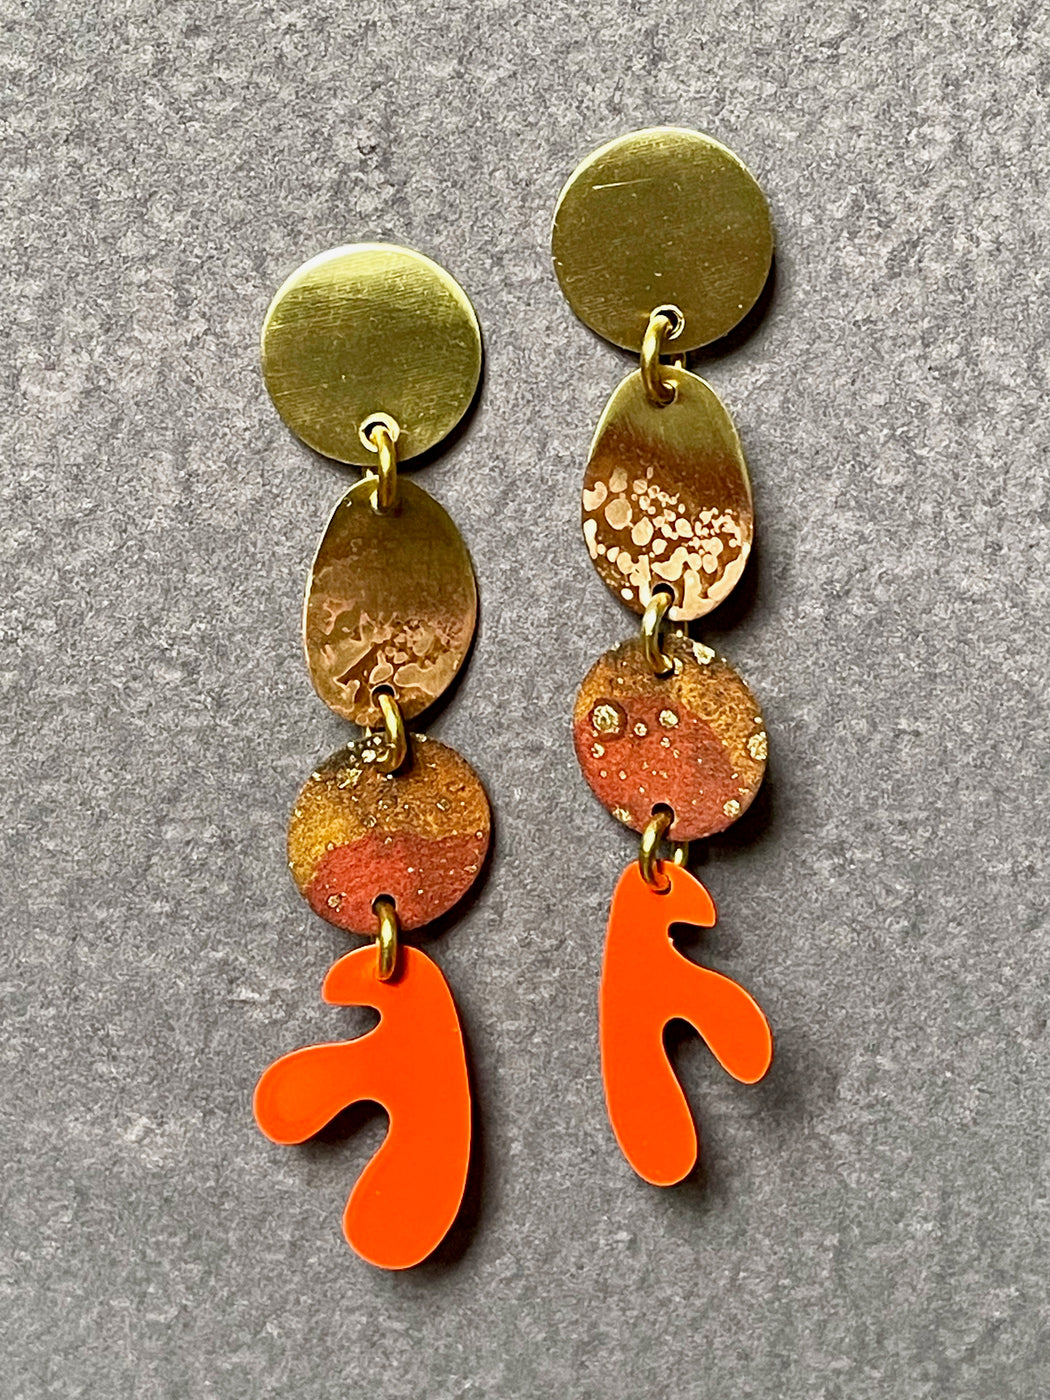 Sibilia "Shapes in a Line" Earrings - Papaya